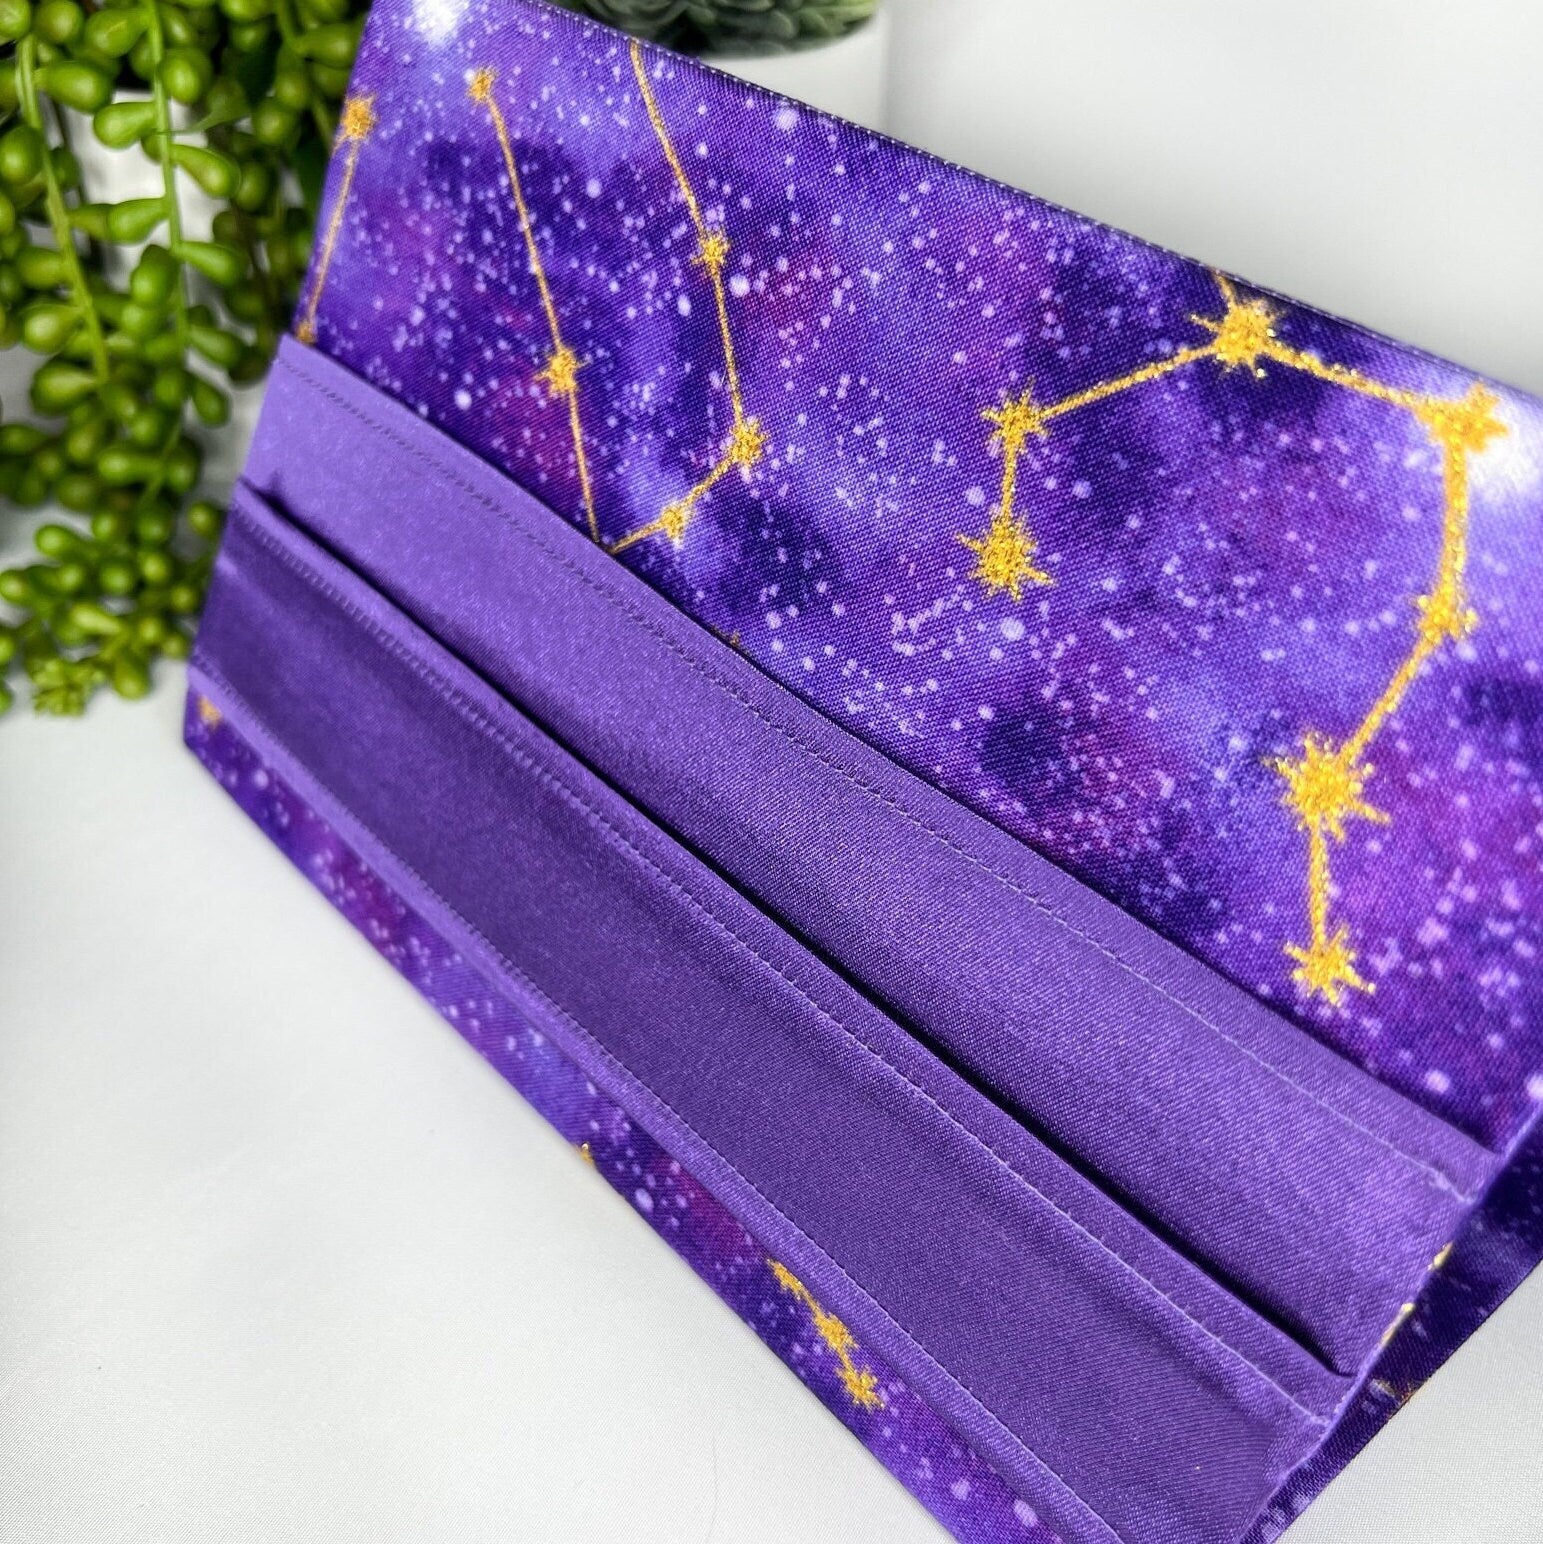 Purple & Gold Constellation Tarot Card Stand